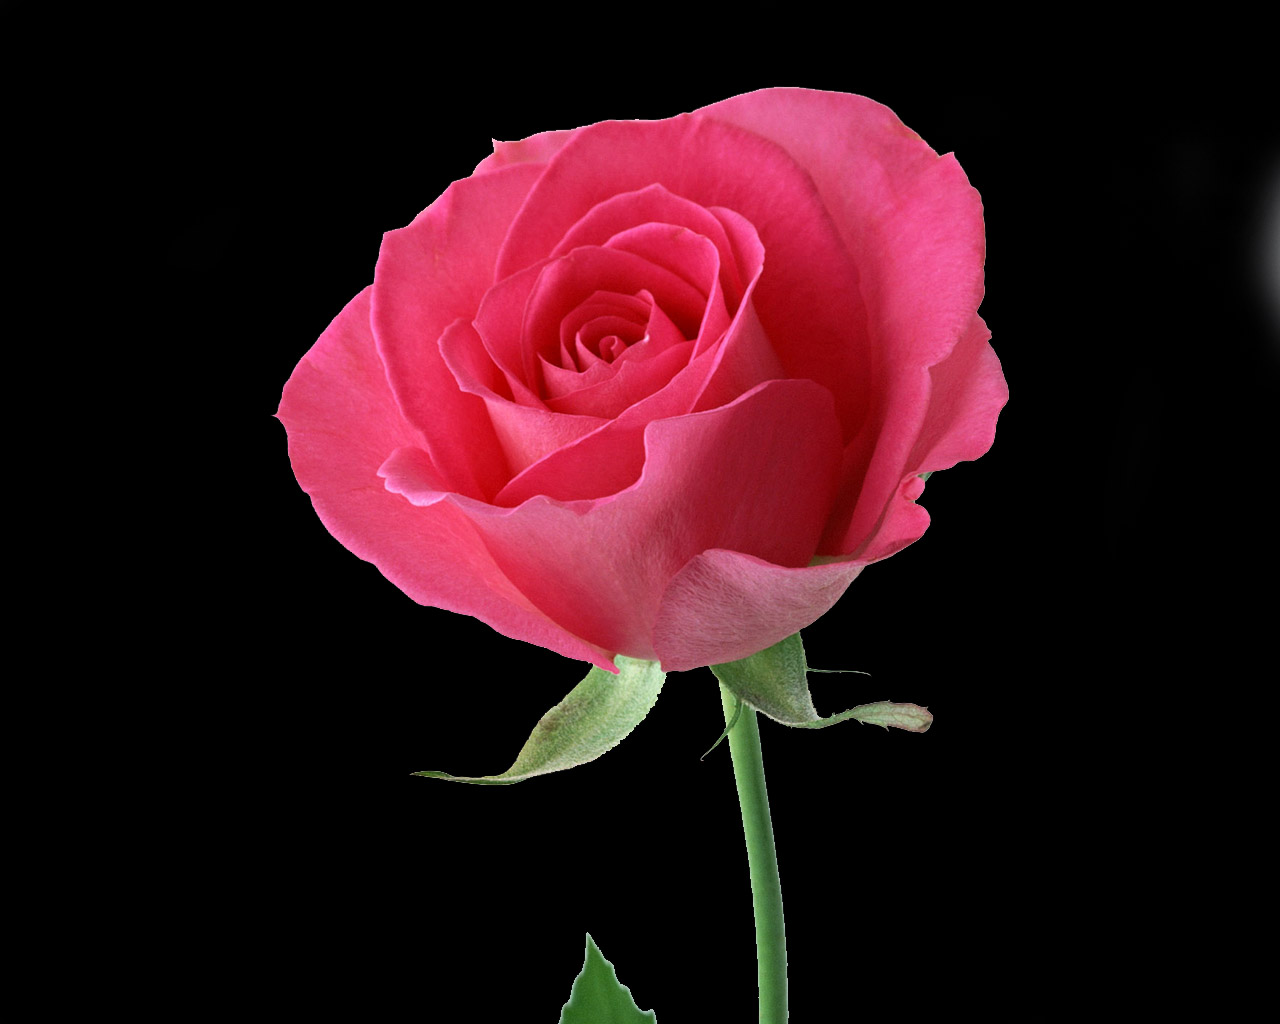 Beautiful Red Rose Flower Photo Wallpaper 1280x1024 22590